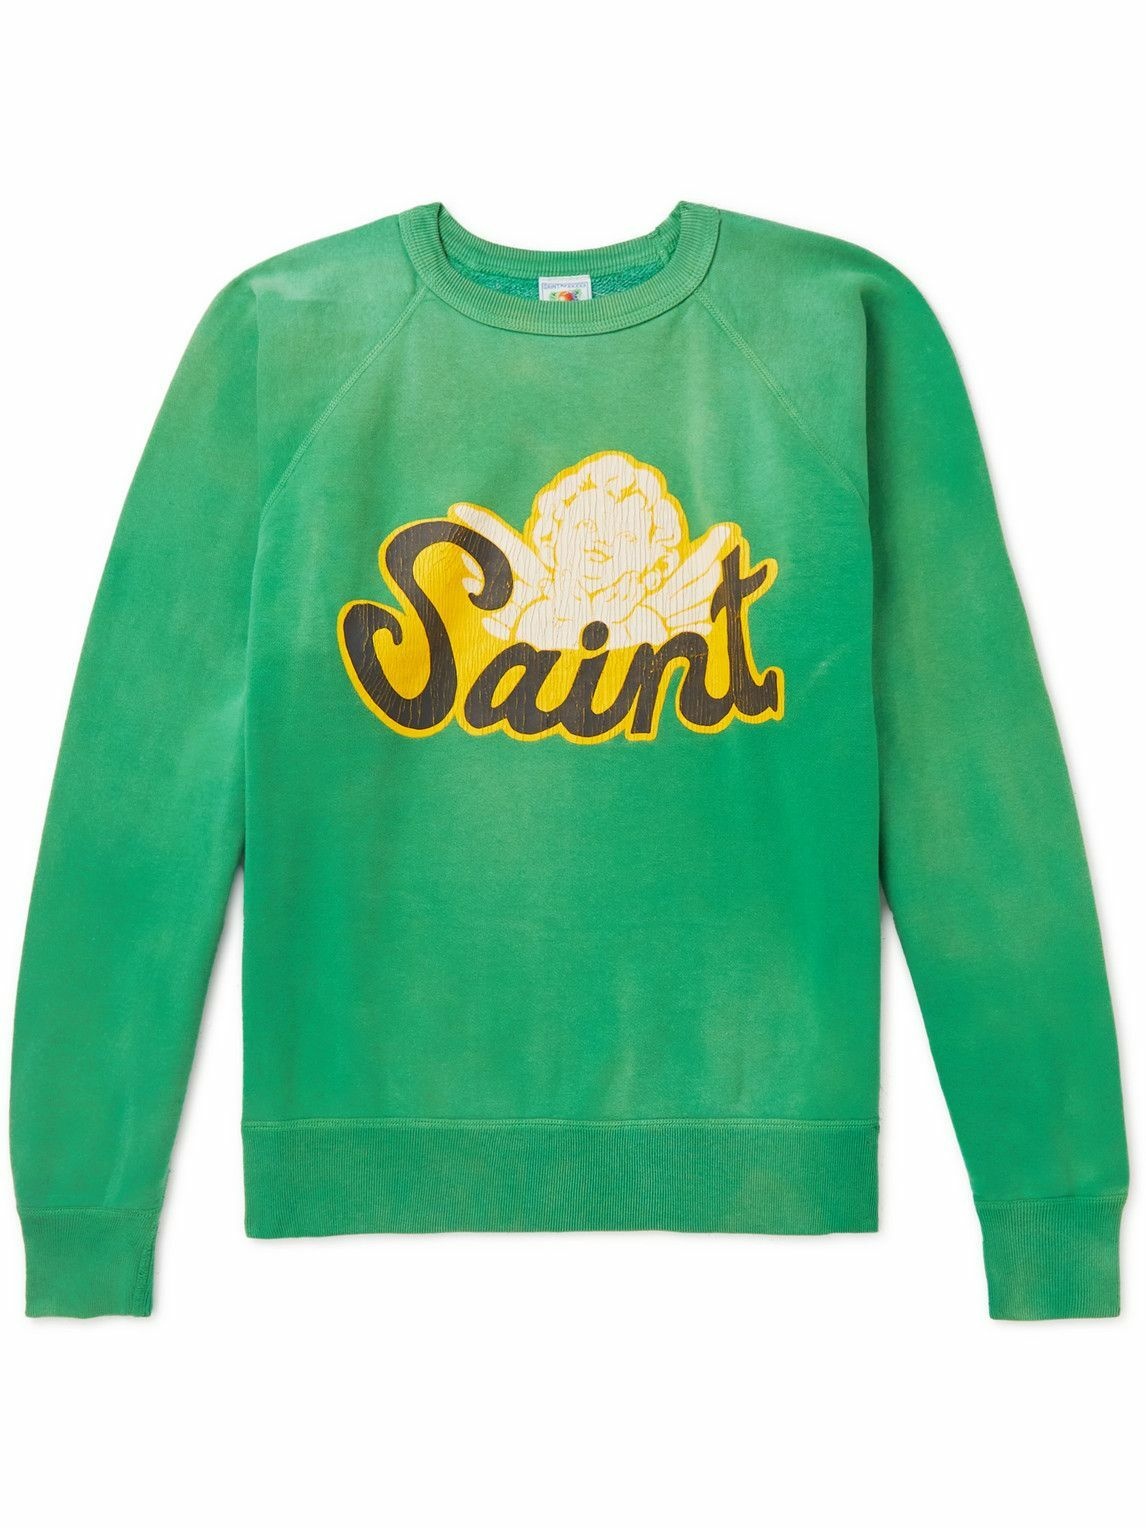 Photo: SAINT Mxxxxxx - Logo-Print Cotton-Jersey Sweatshirt - Green